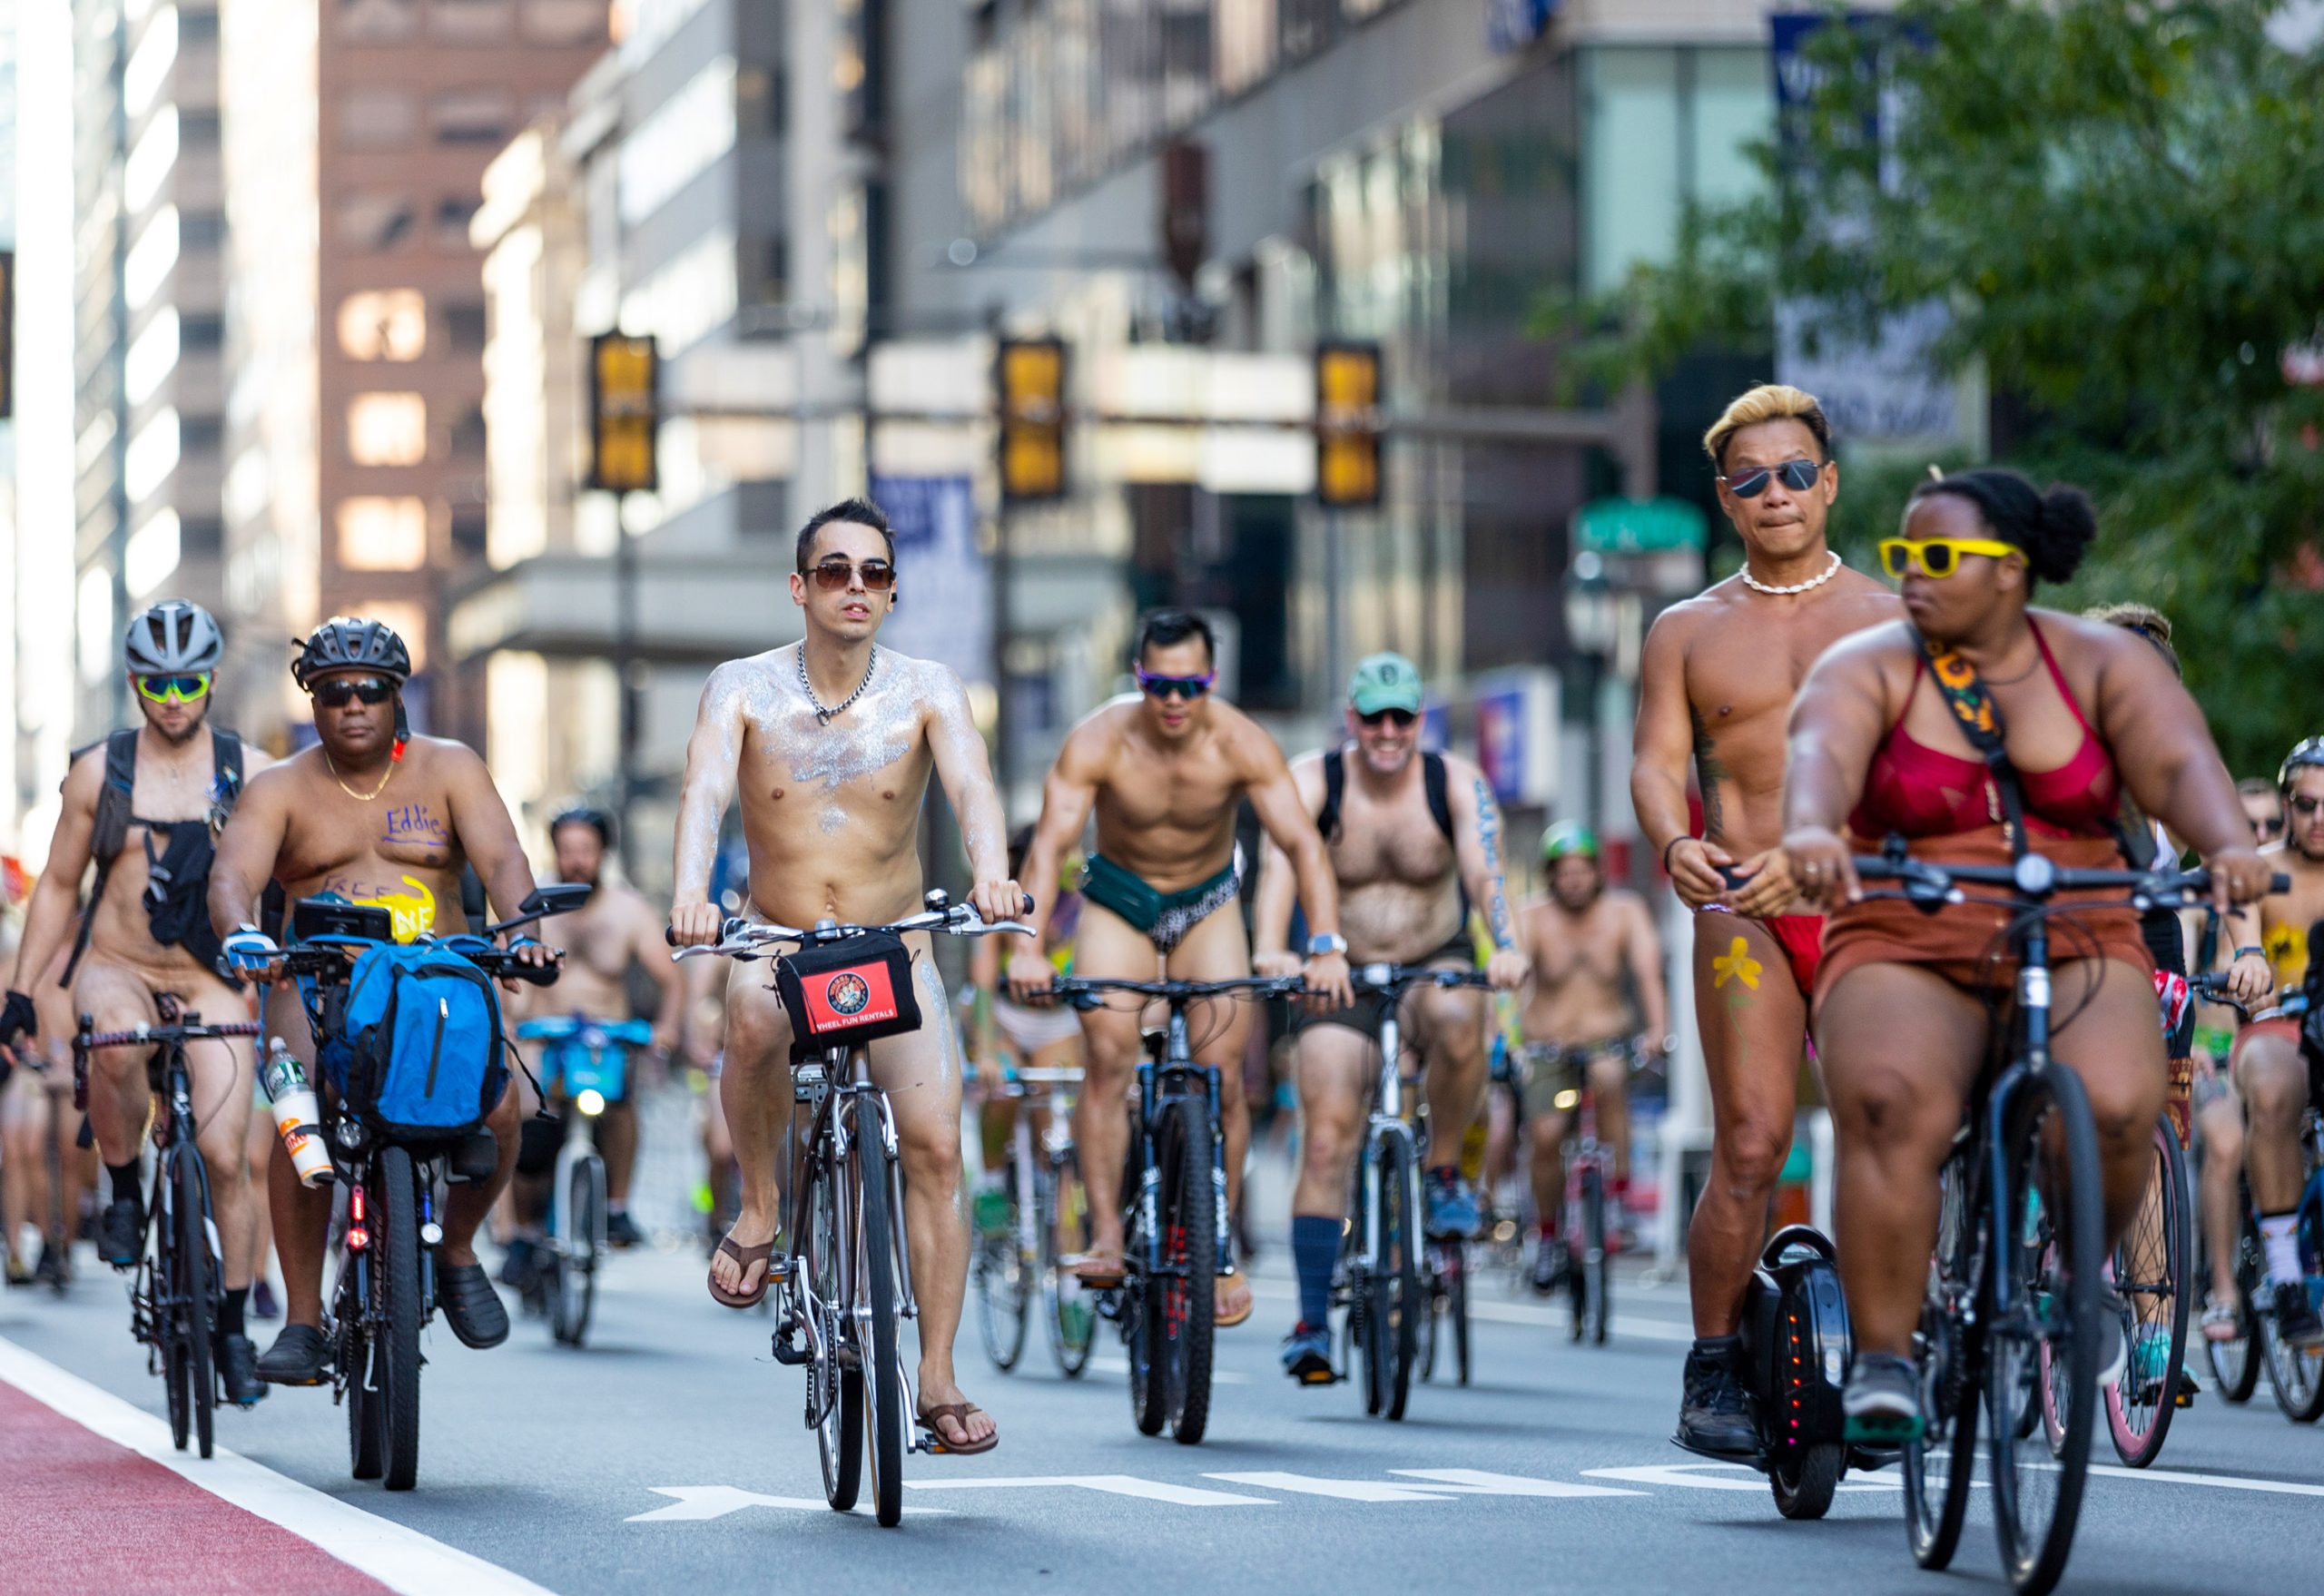 Best of Nude female bike riders